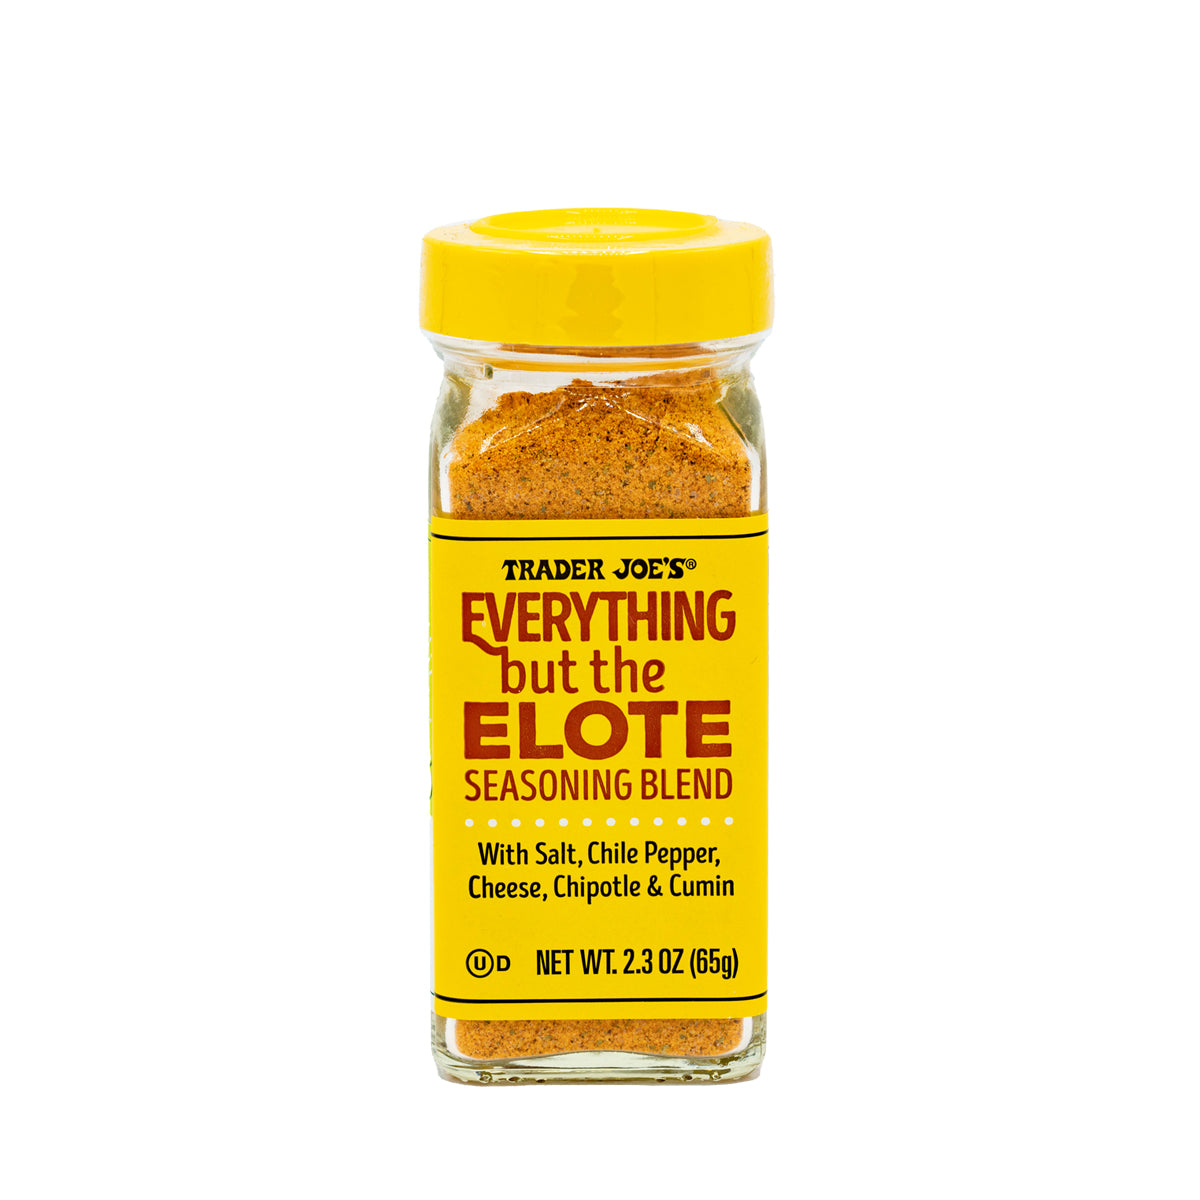 Trader Joe's Everything but the Elote Seasoning Blend